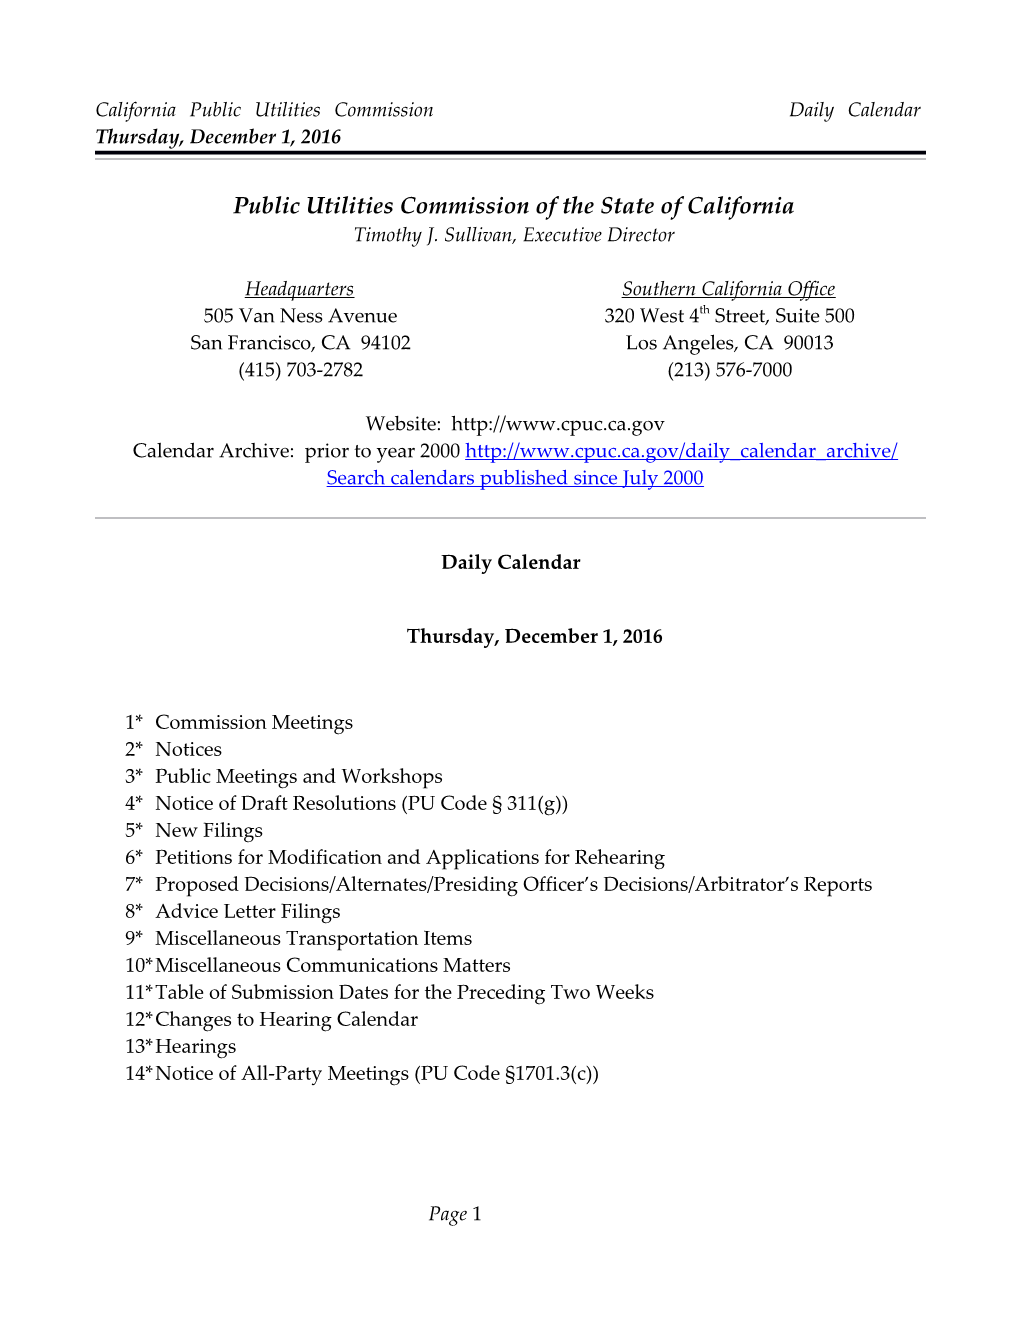 California Public Utilities Commission Daily Calendar Thursday, December 1, 2016